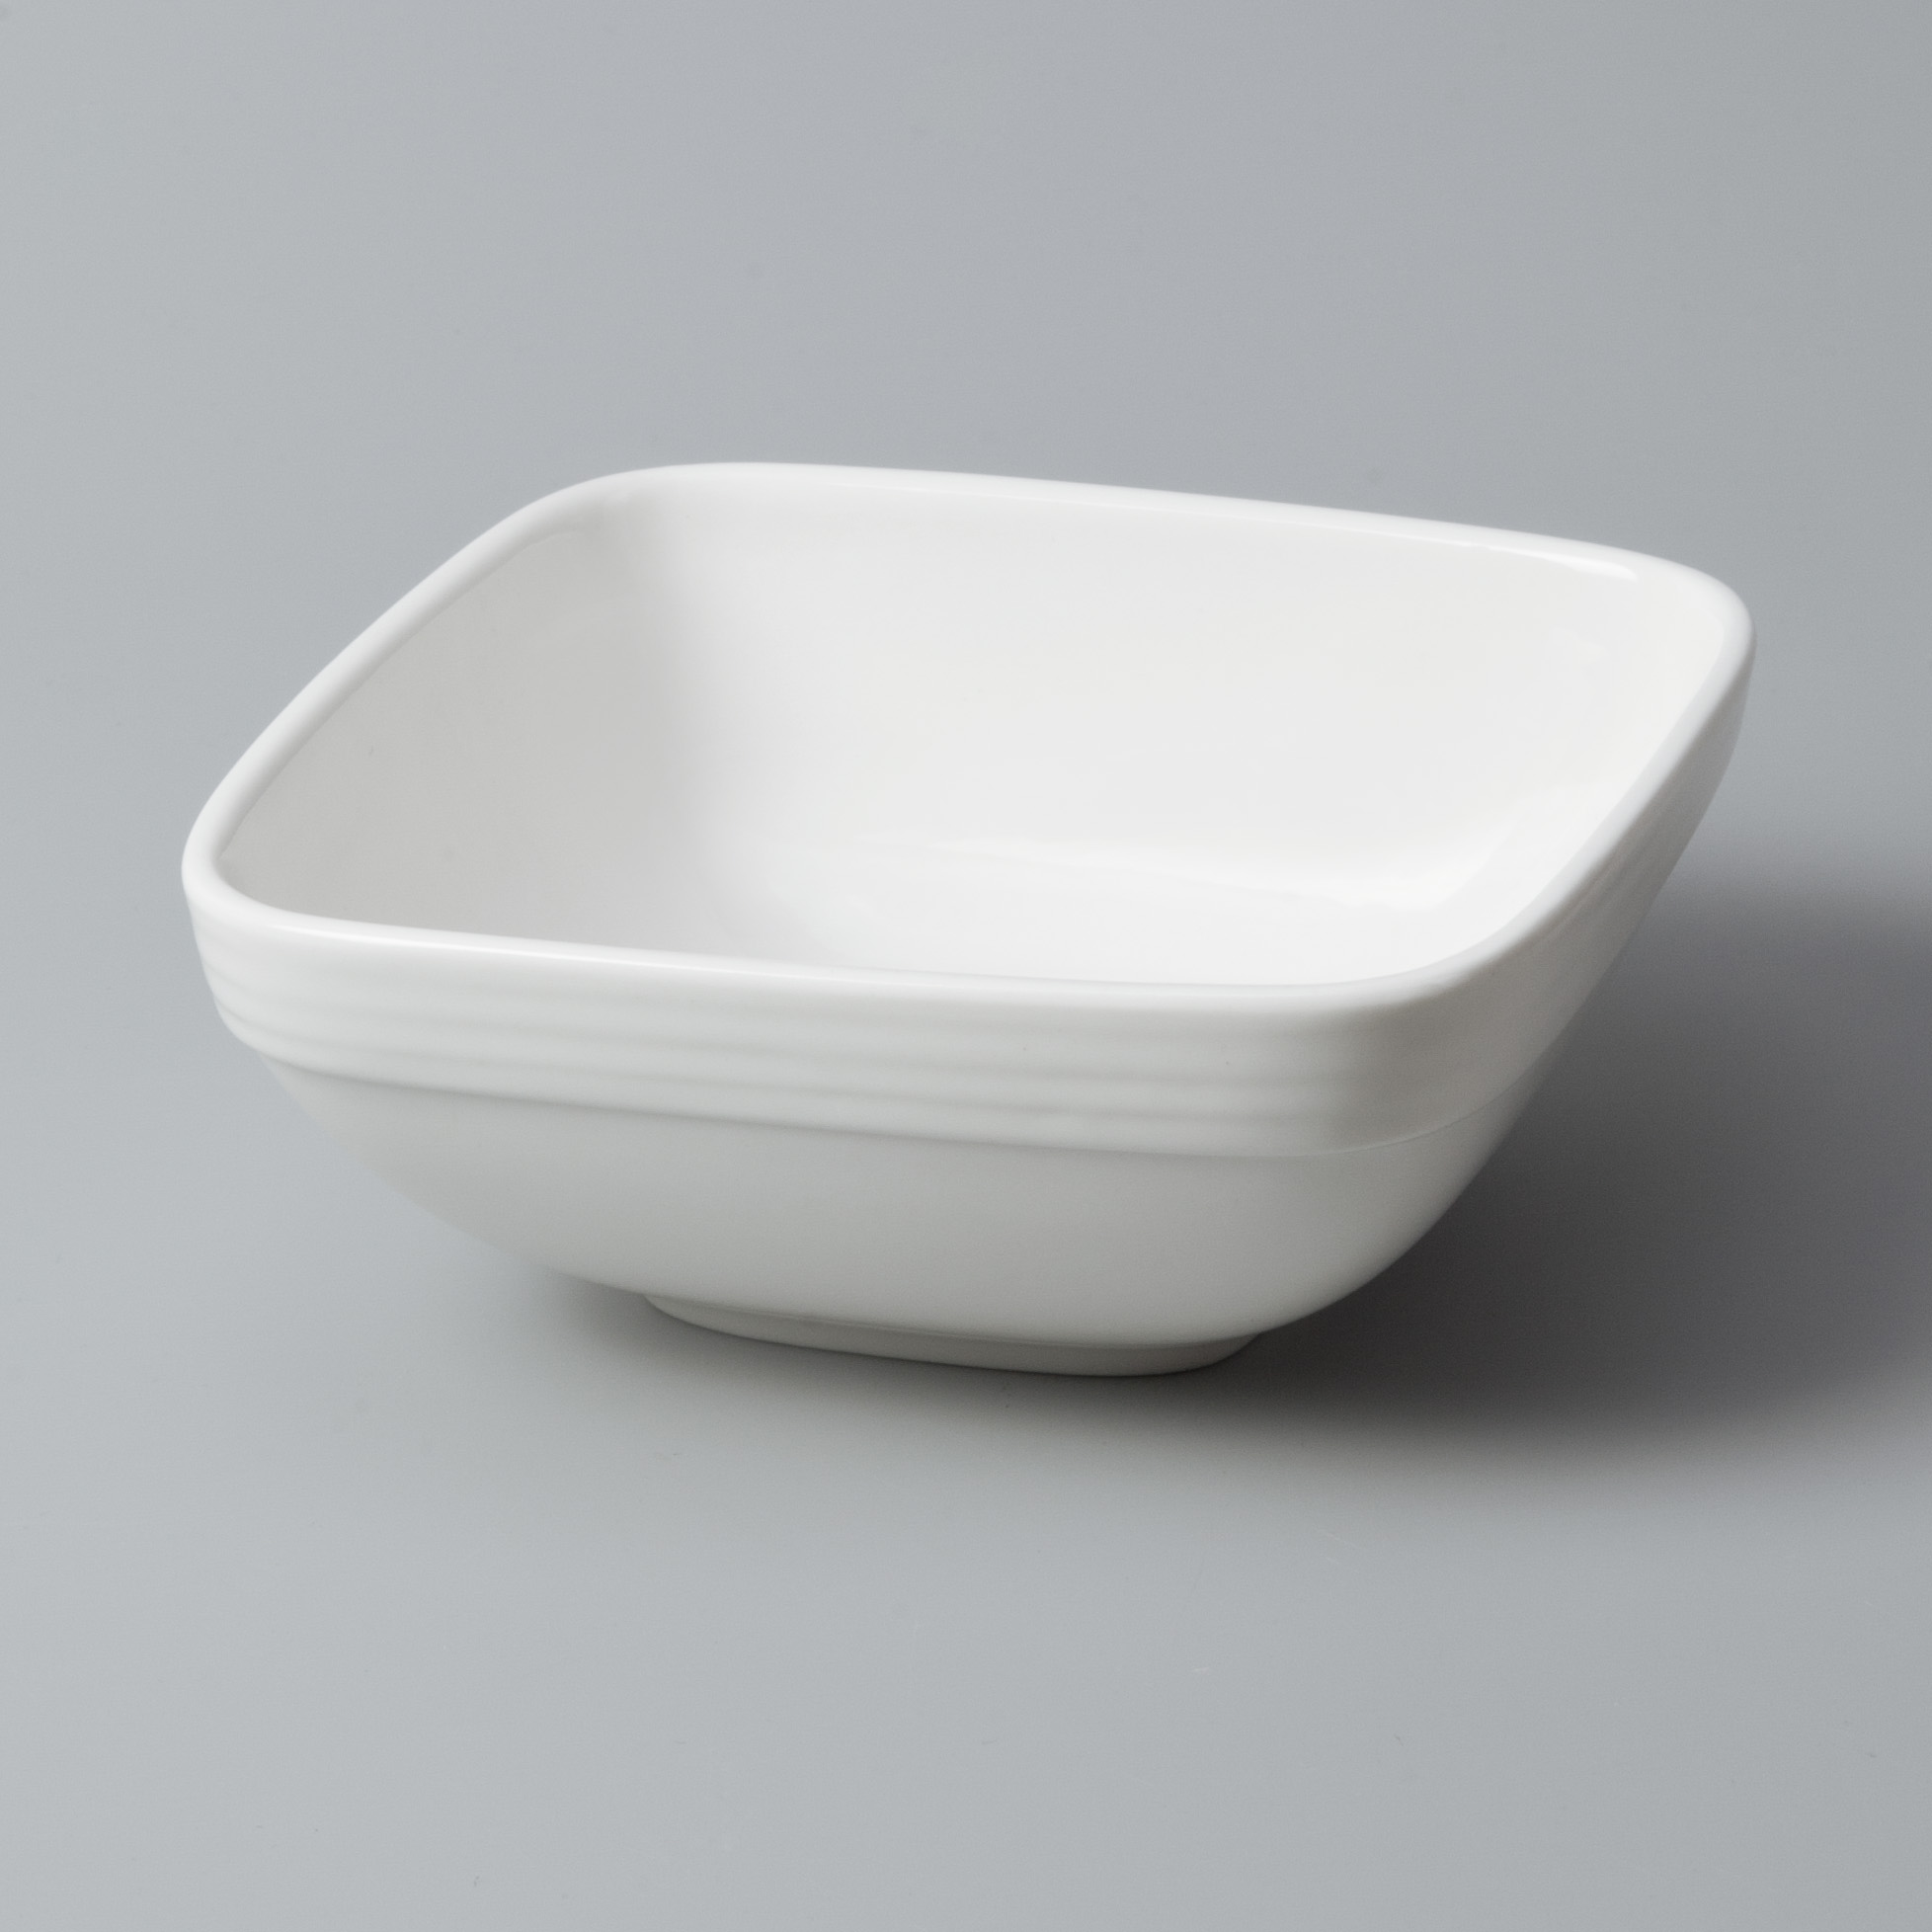 Two Eight irregular french white porcelain dinnerware series for hotel-7